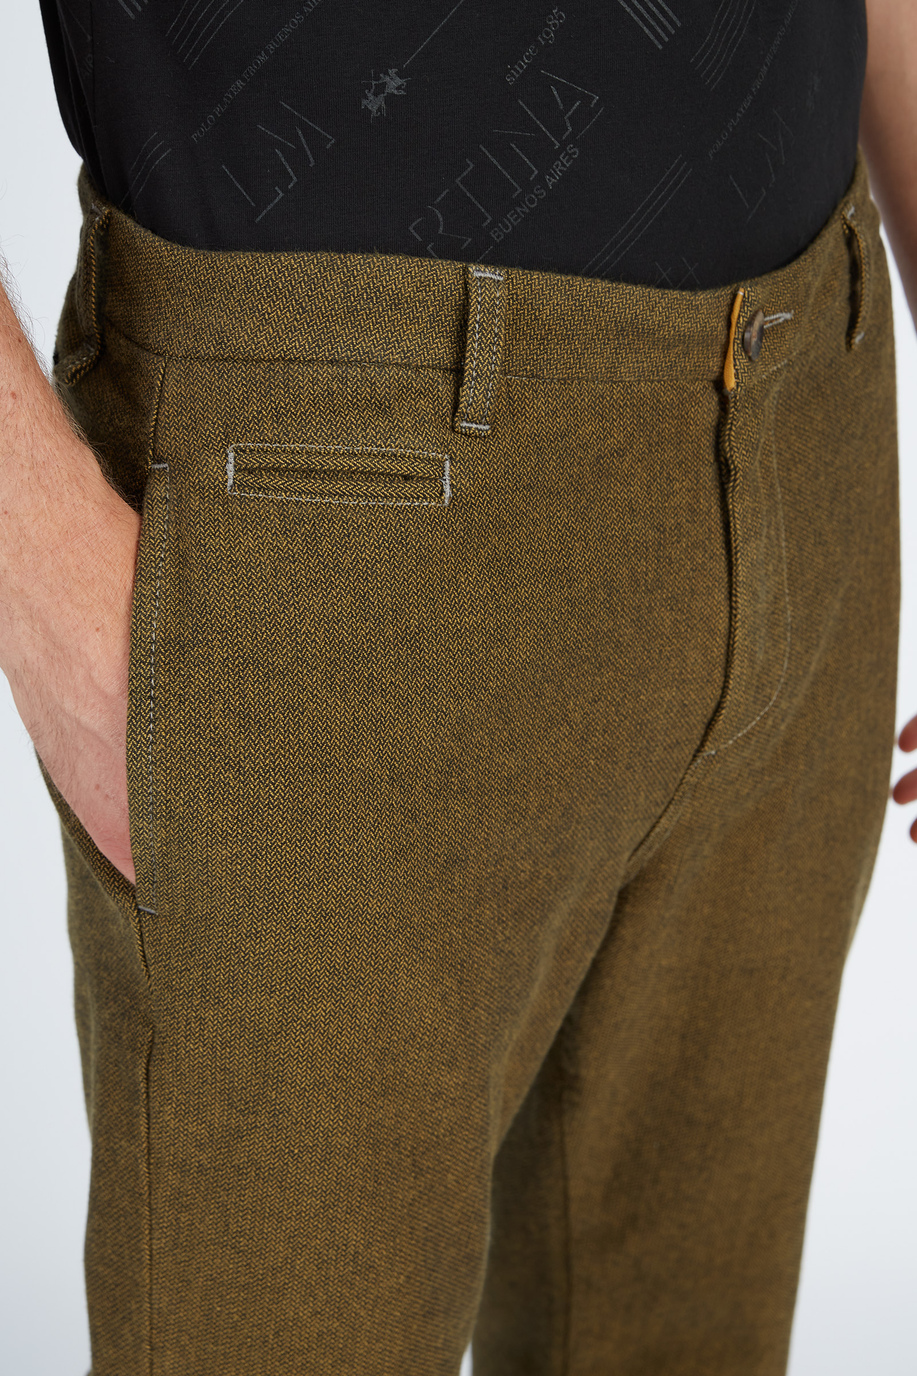 Men’s trousers 5 pockets regular fit cotton - Winter looks for him | La Martina - Official Online Shop